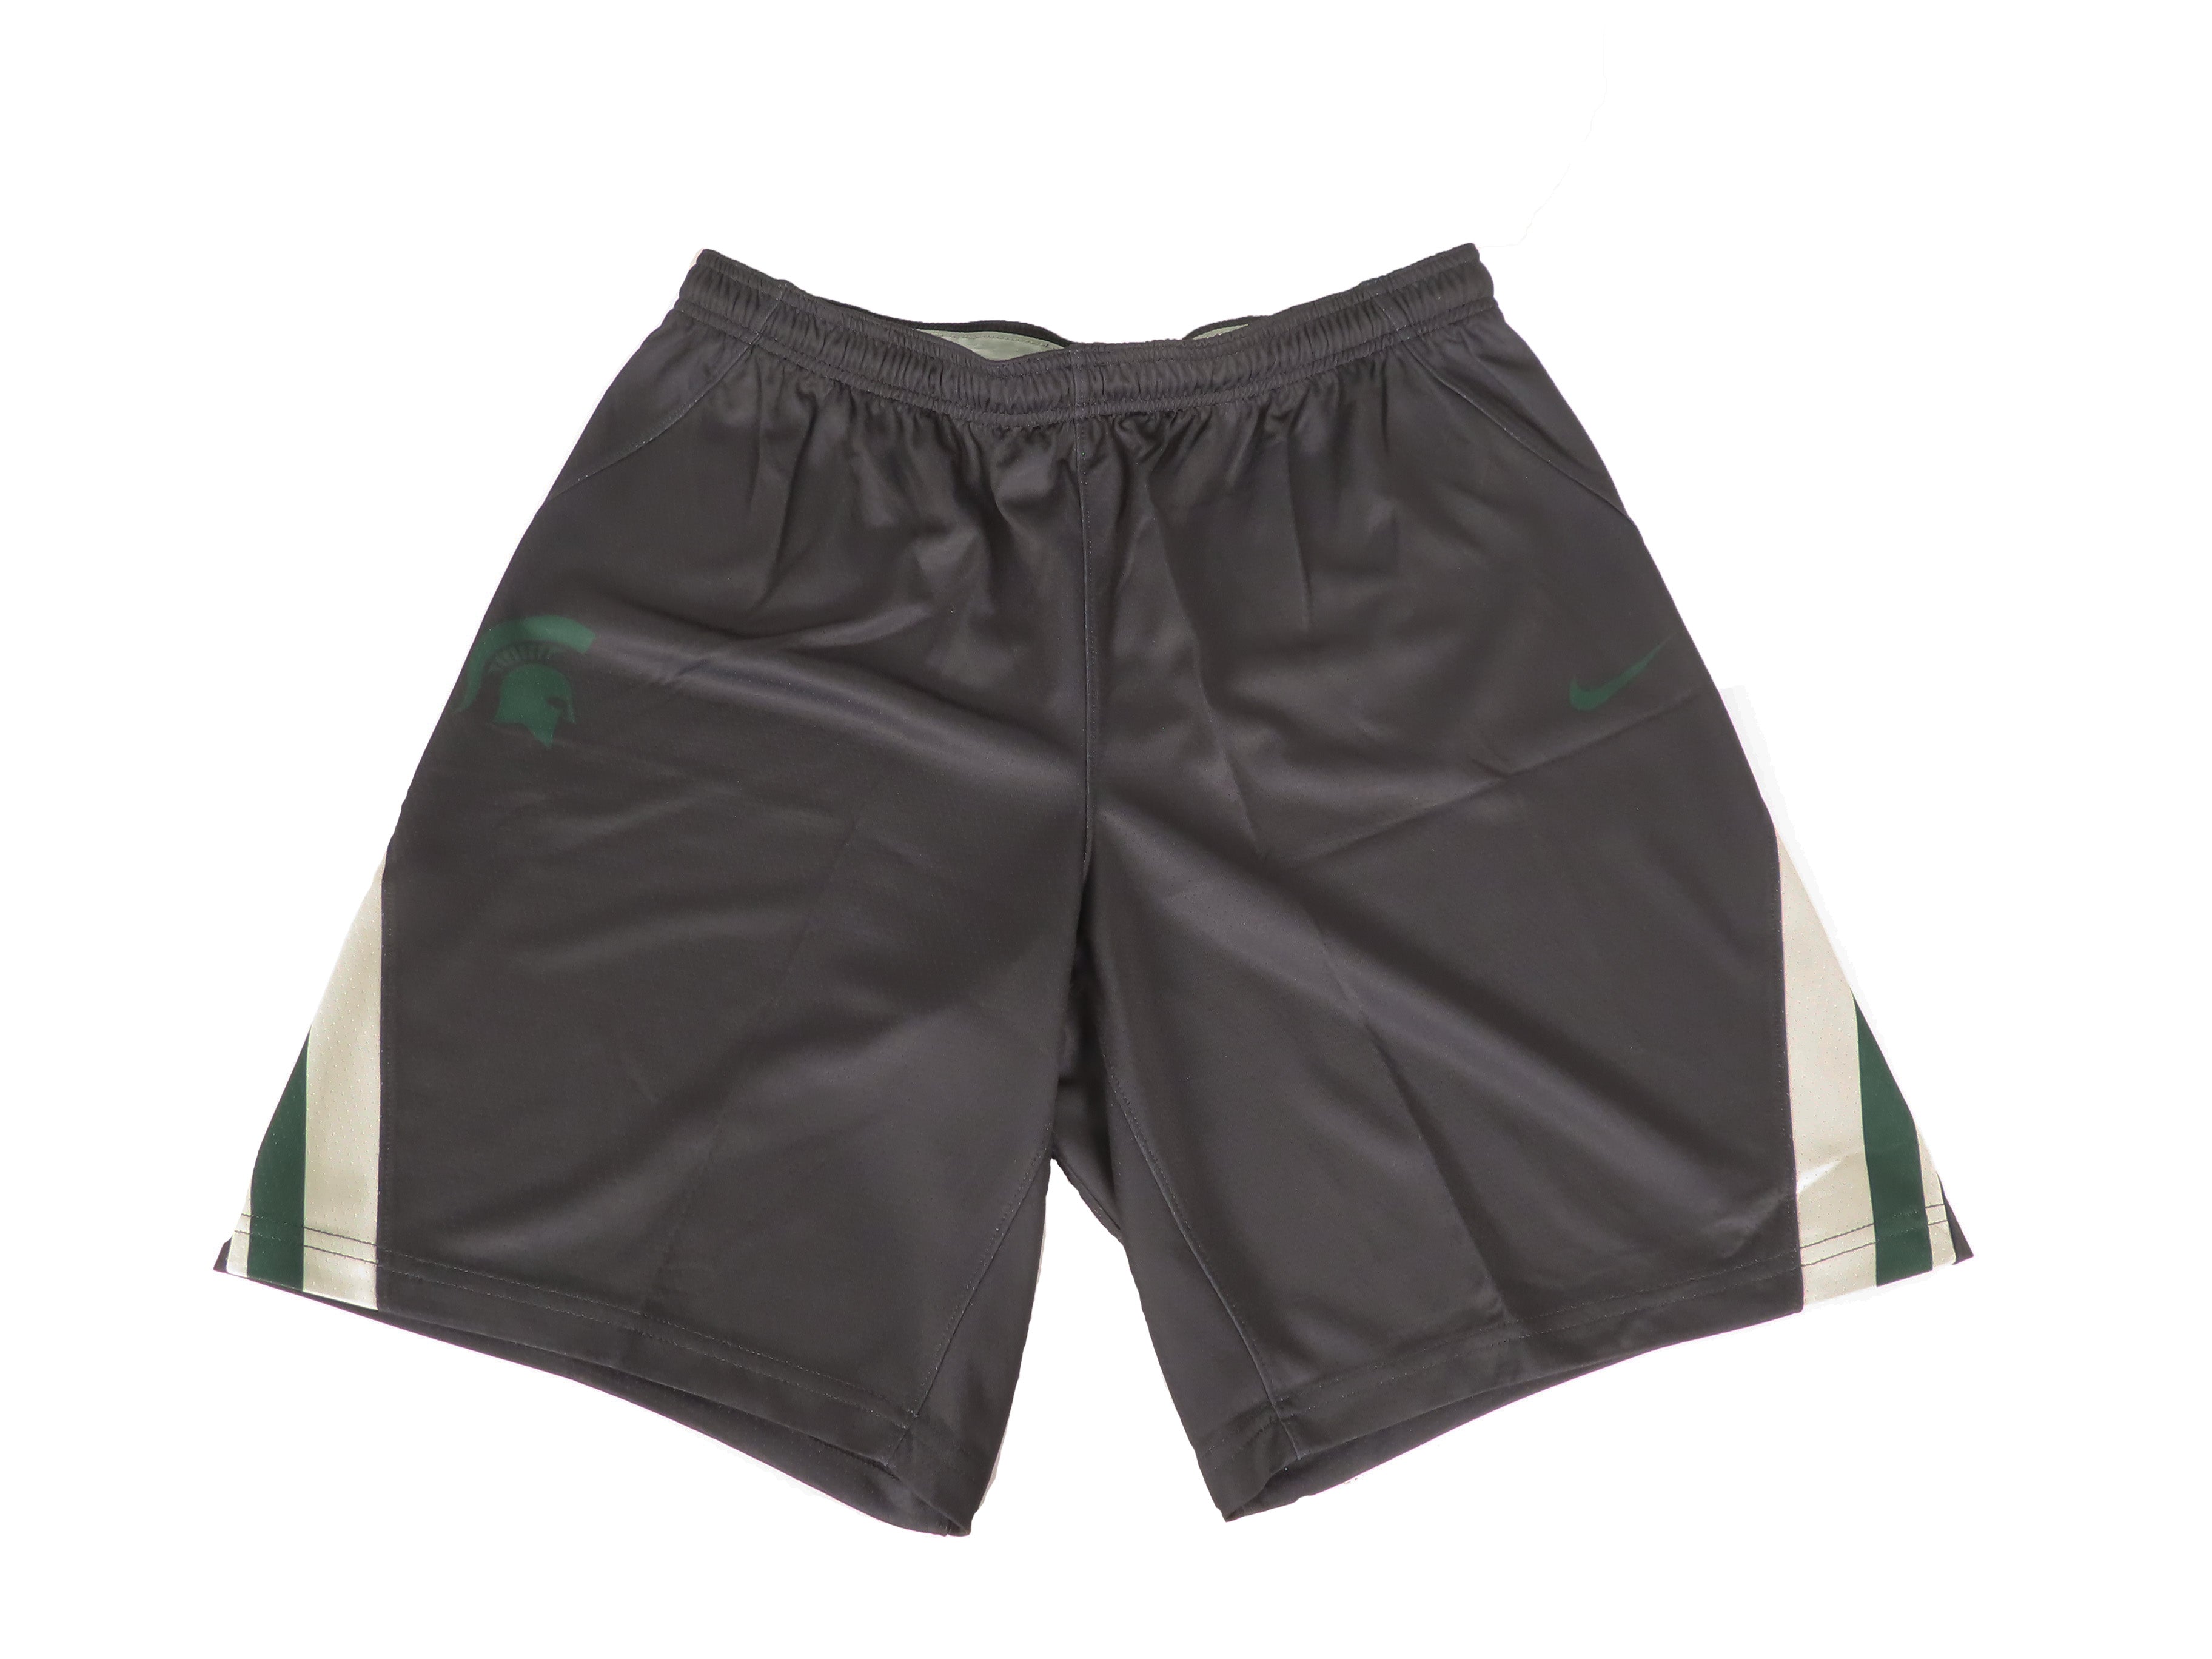 Nike Green & White Reversible Basketball Jersey Men's Size XS – MSU Surplus  Store